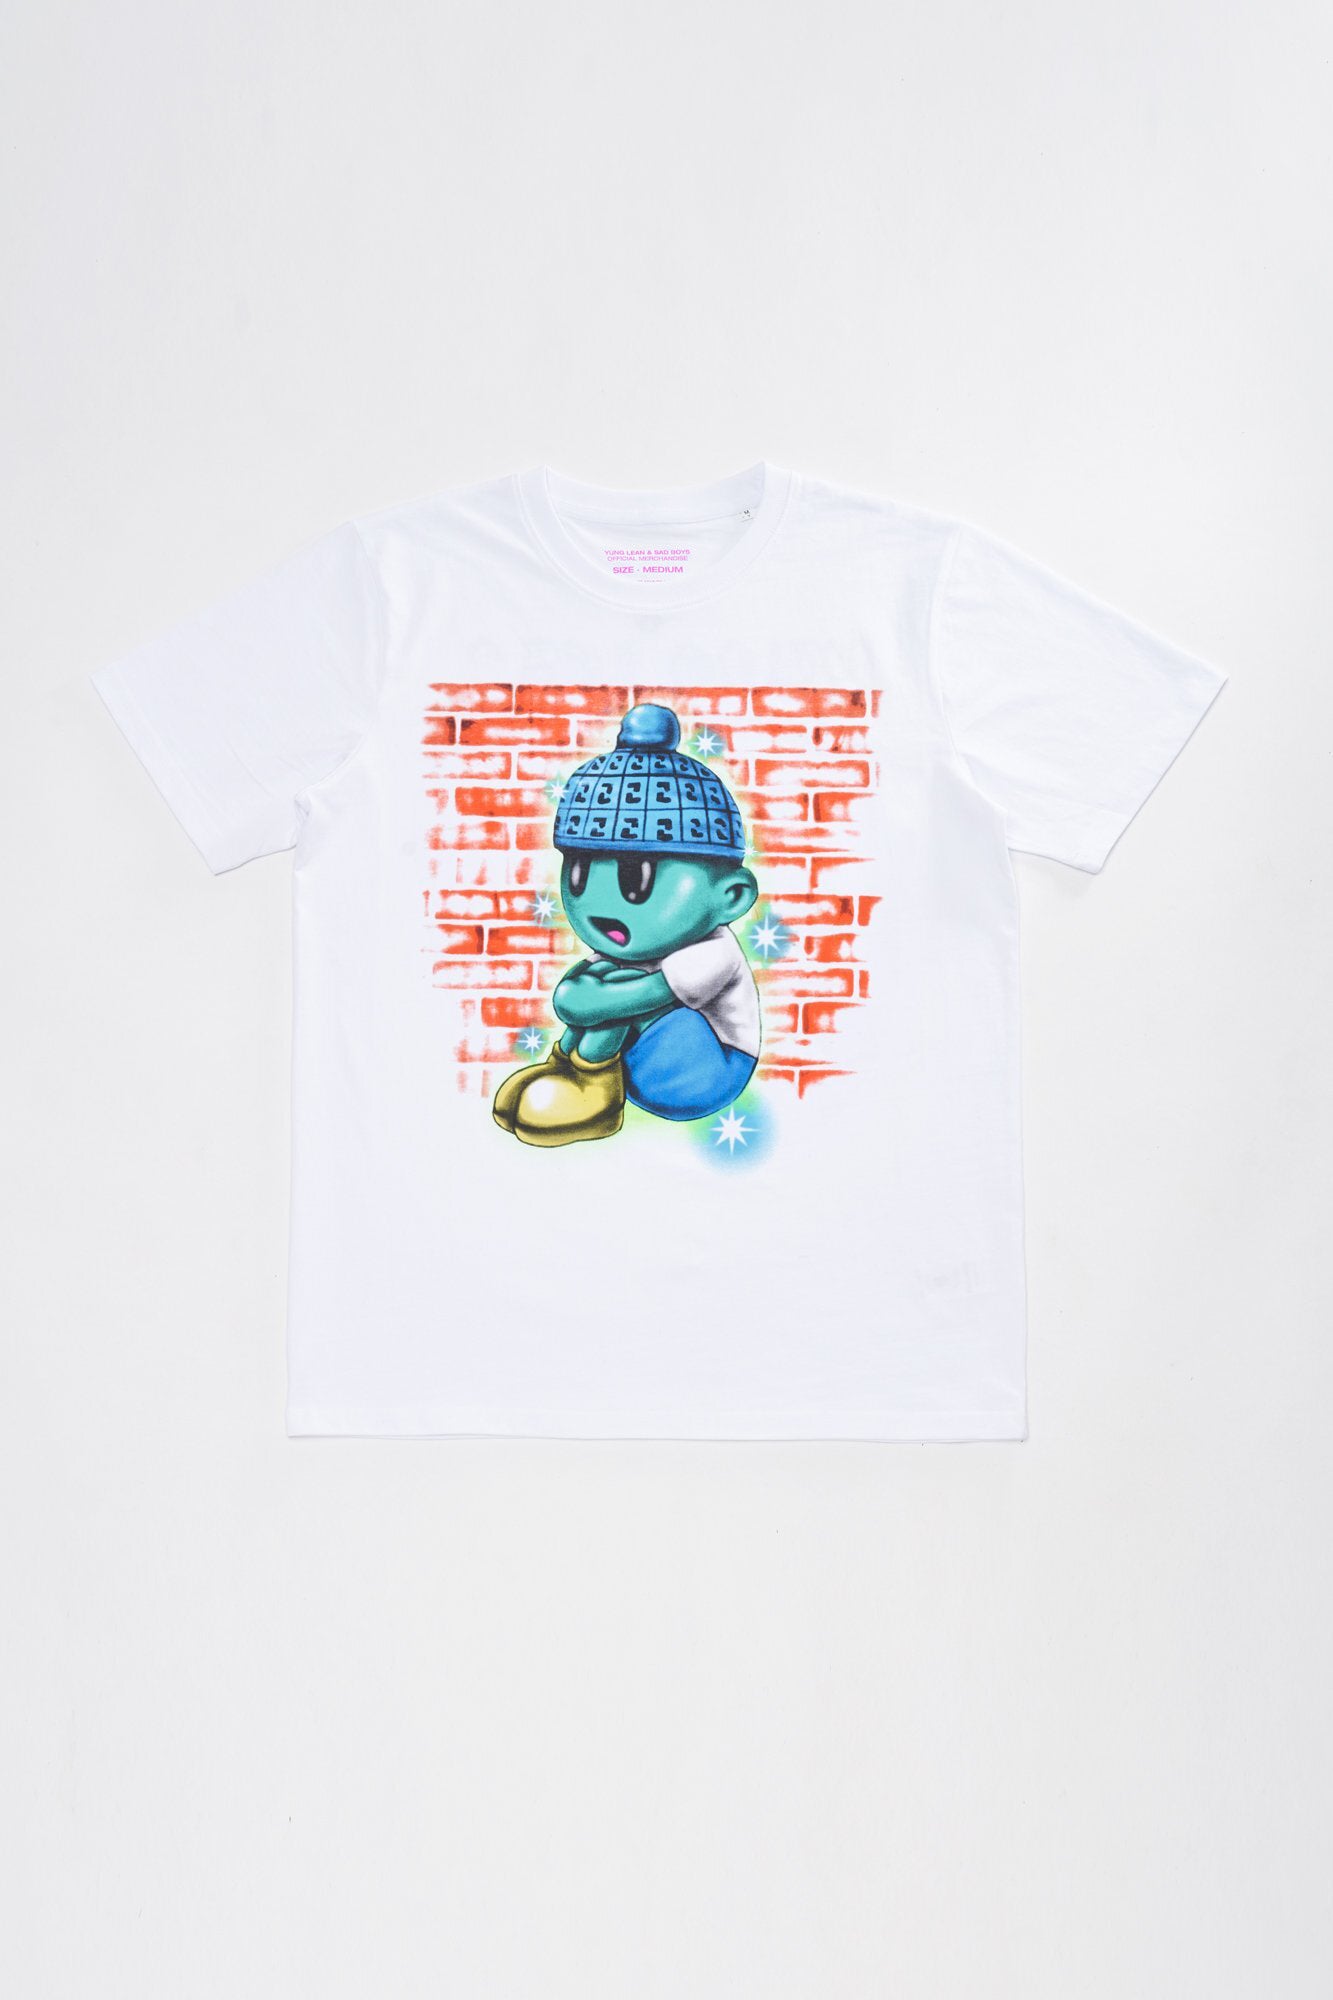 T-SHIRT – Yung Lean & Sad Boys Merchandise (NA)